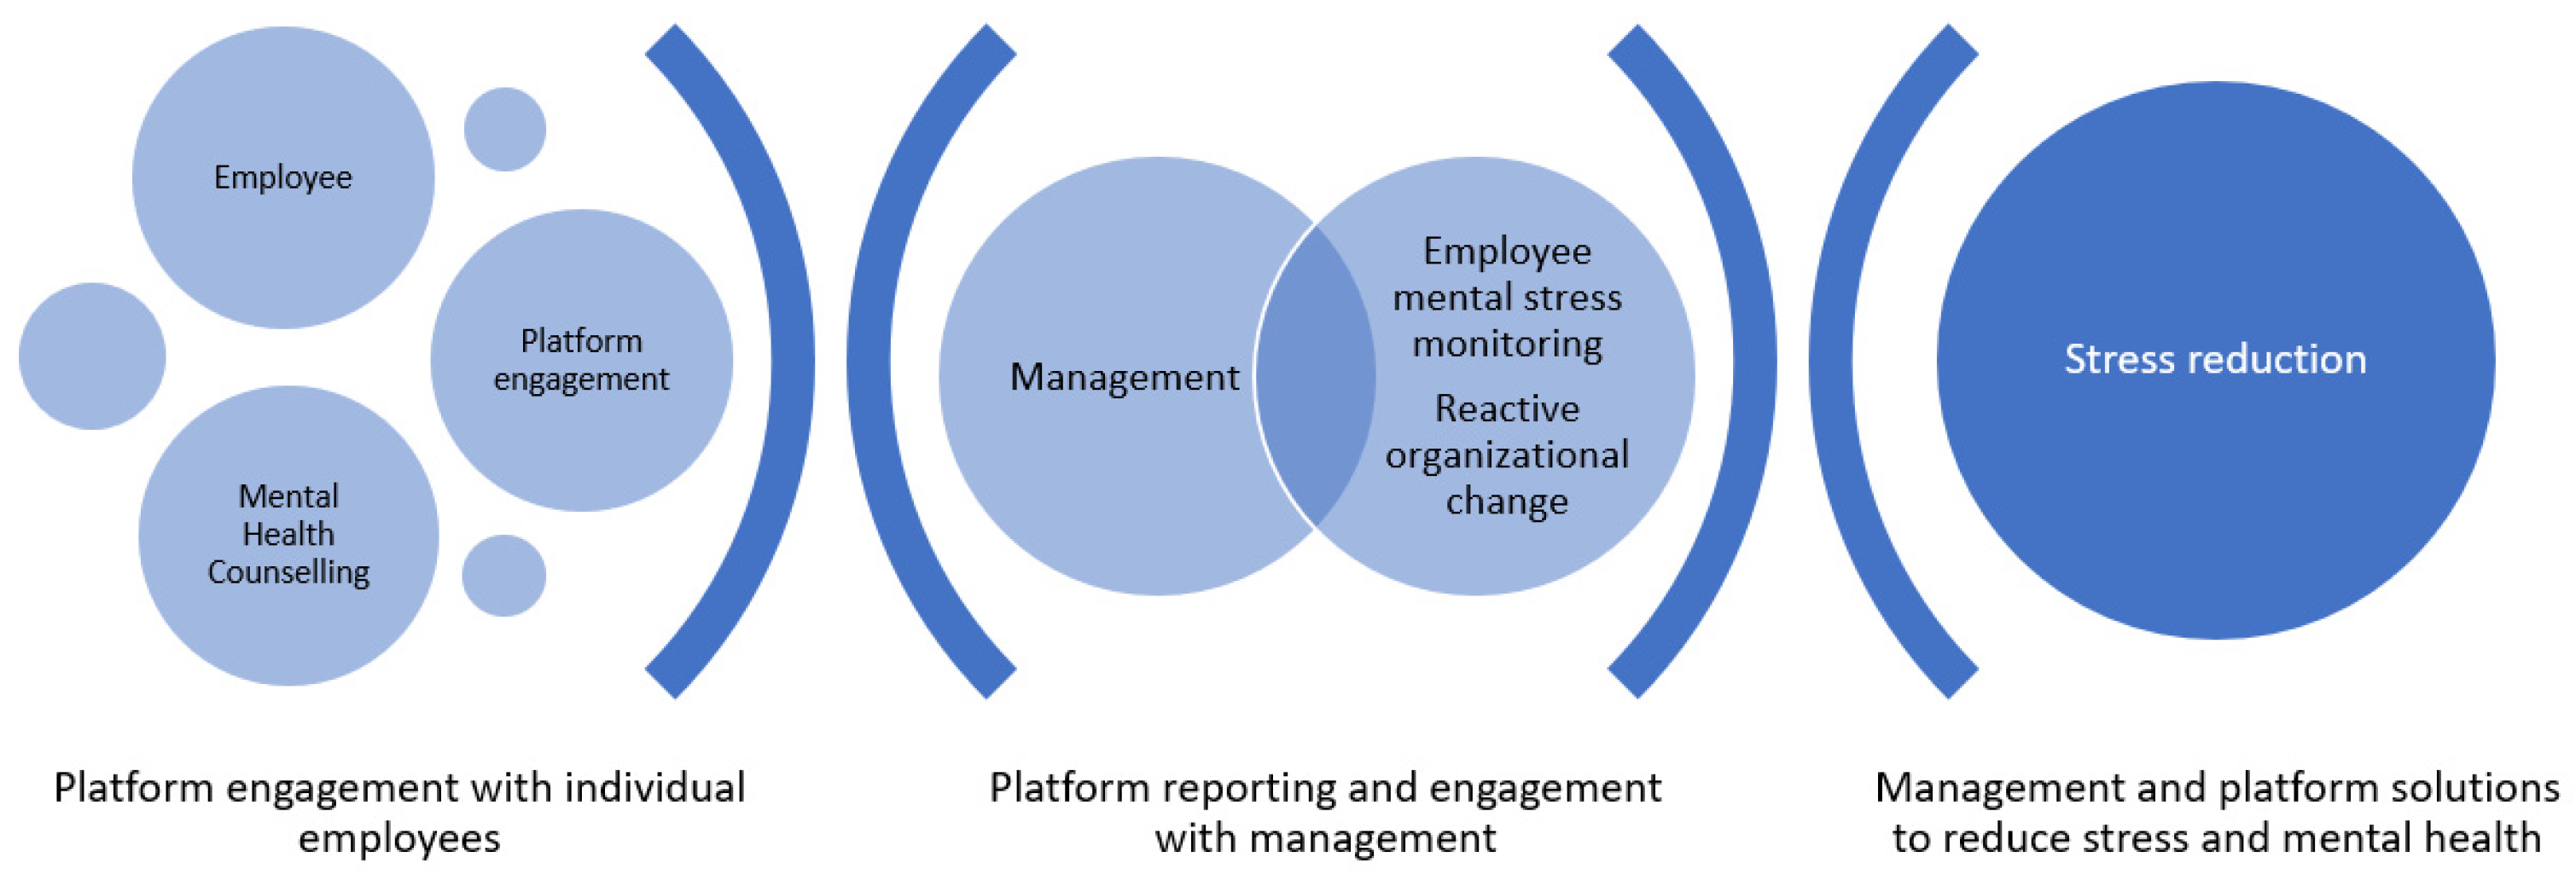 Enterprise Platforms & Tech Solutions in Behavioral Health